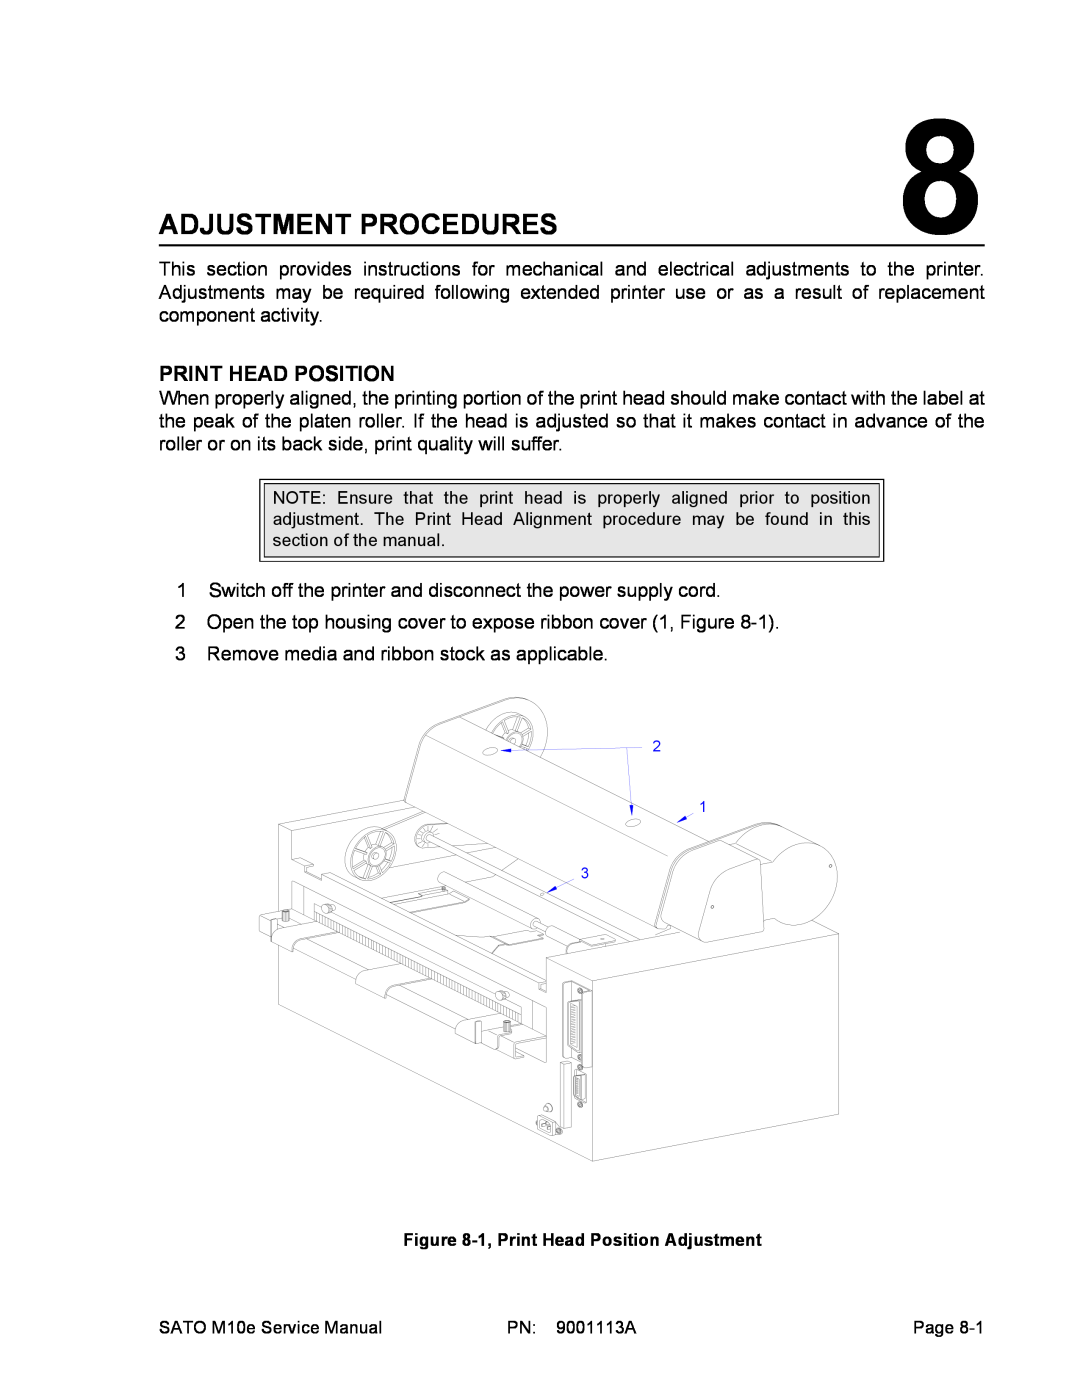 SATO 10e service manual Adjustment Procedures, Print Head Position 